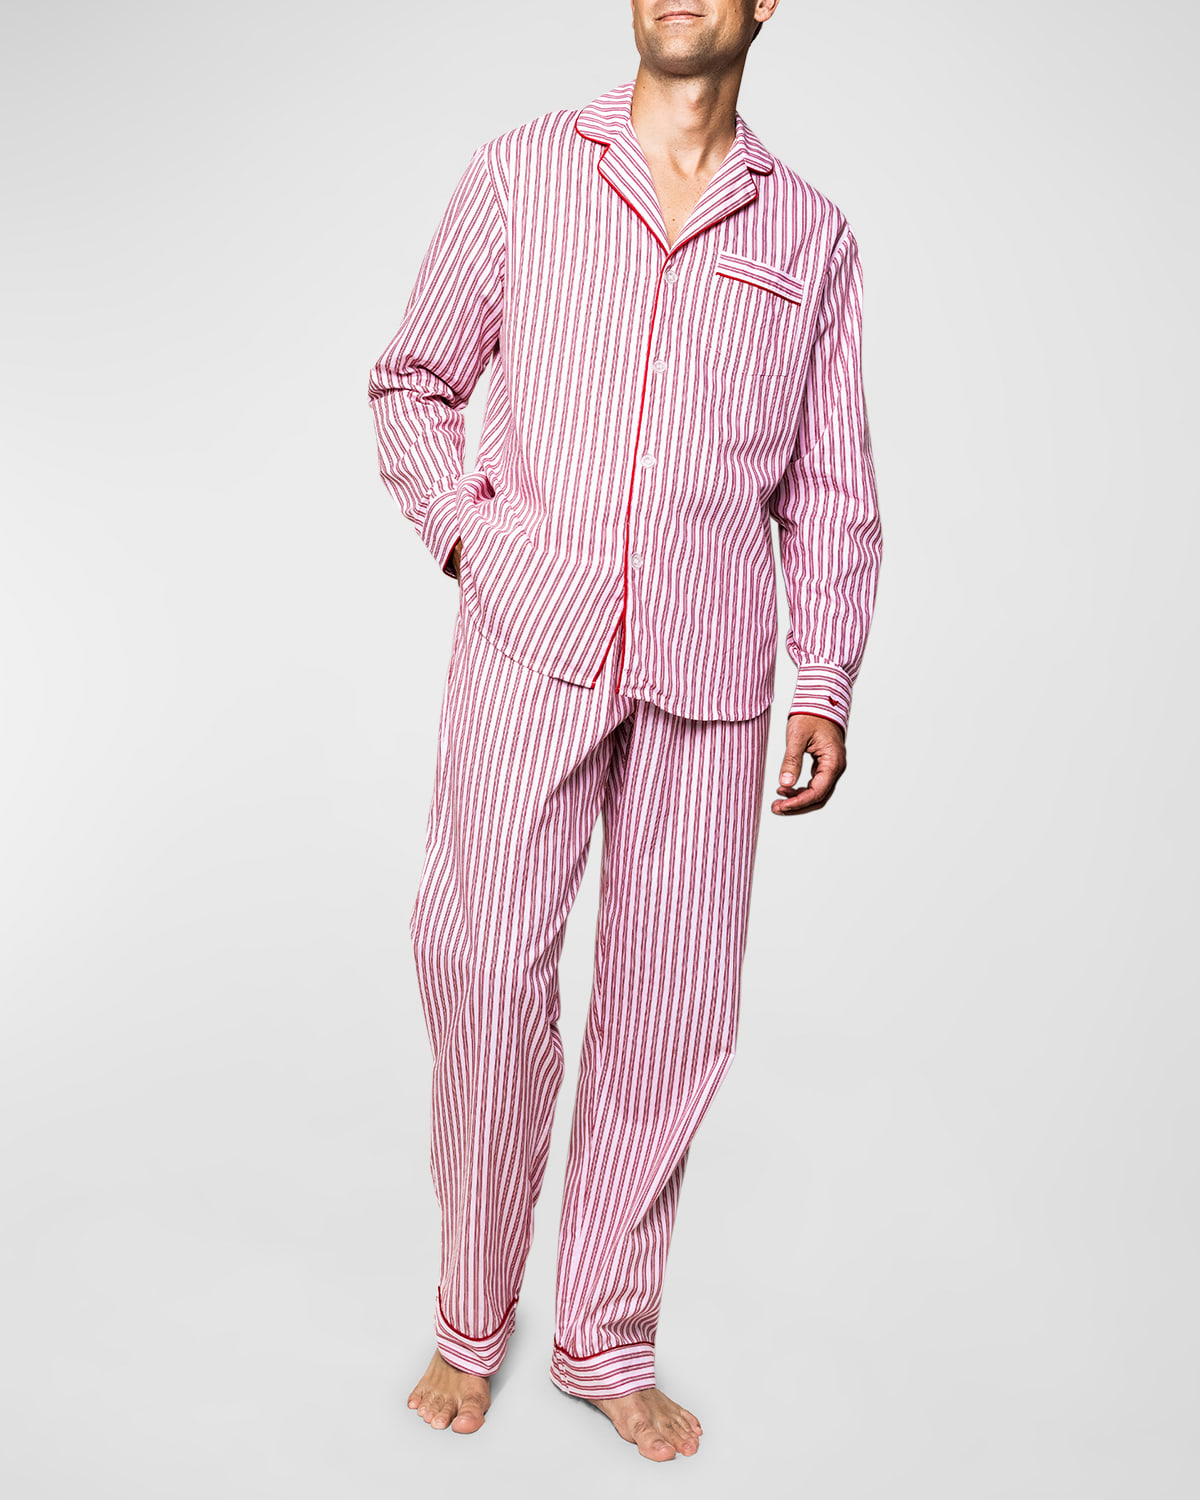 Petite Plume Men's Ticking-Stripe Pajama Set, Red